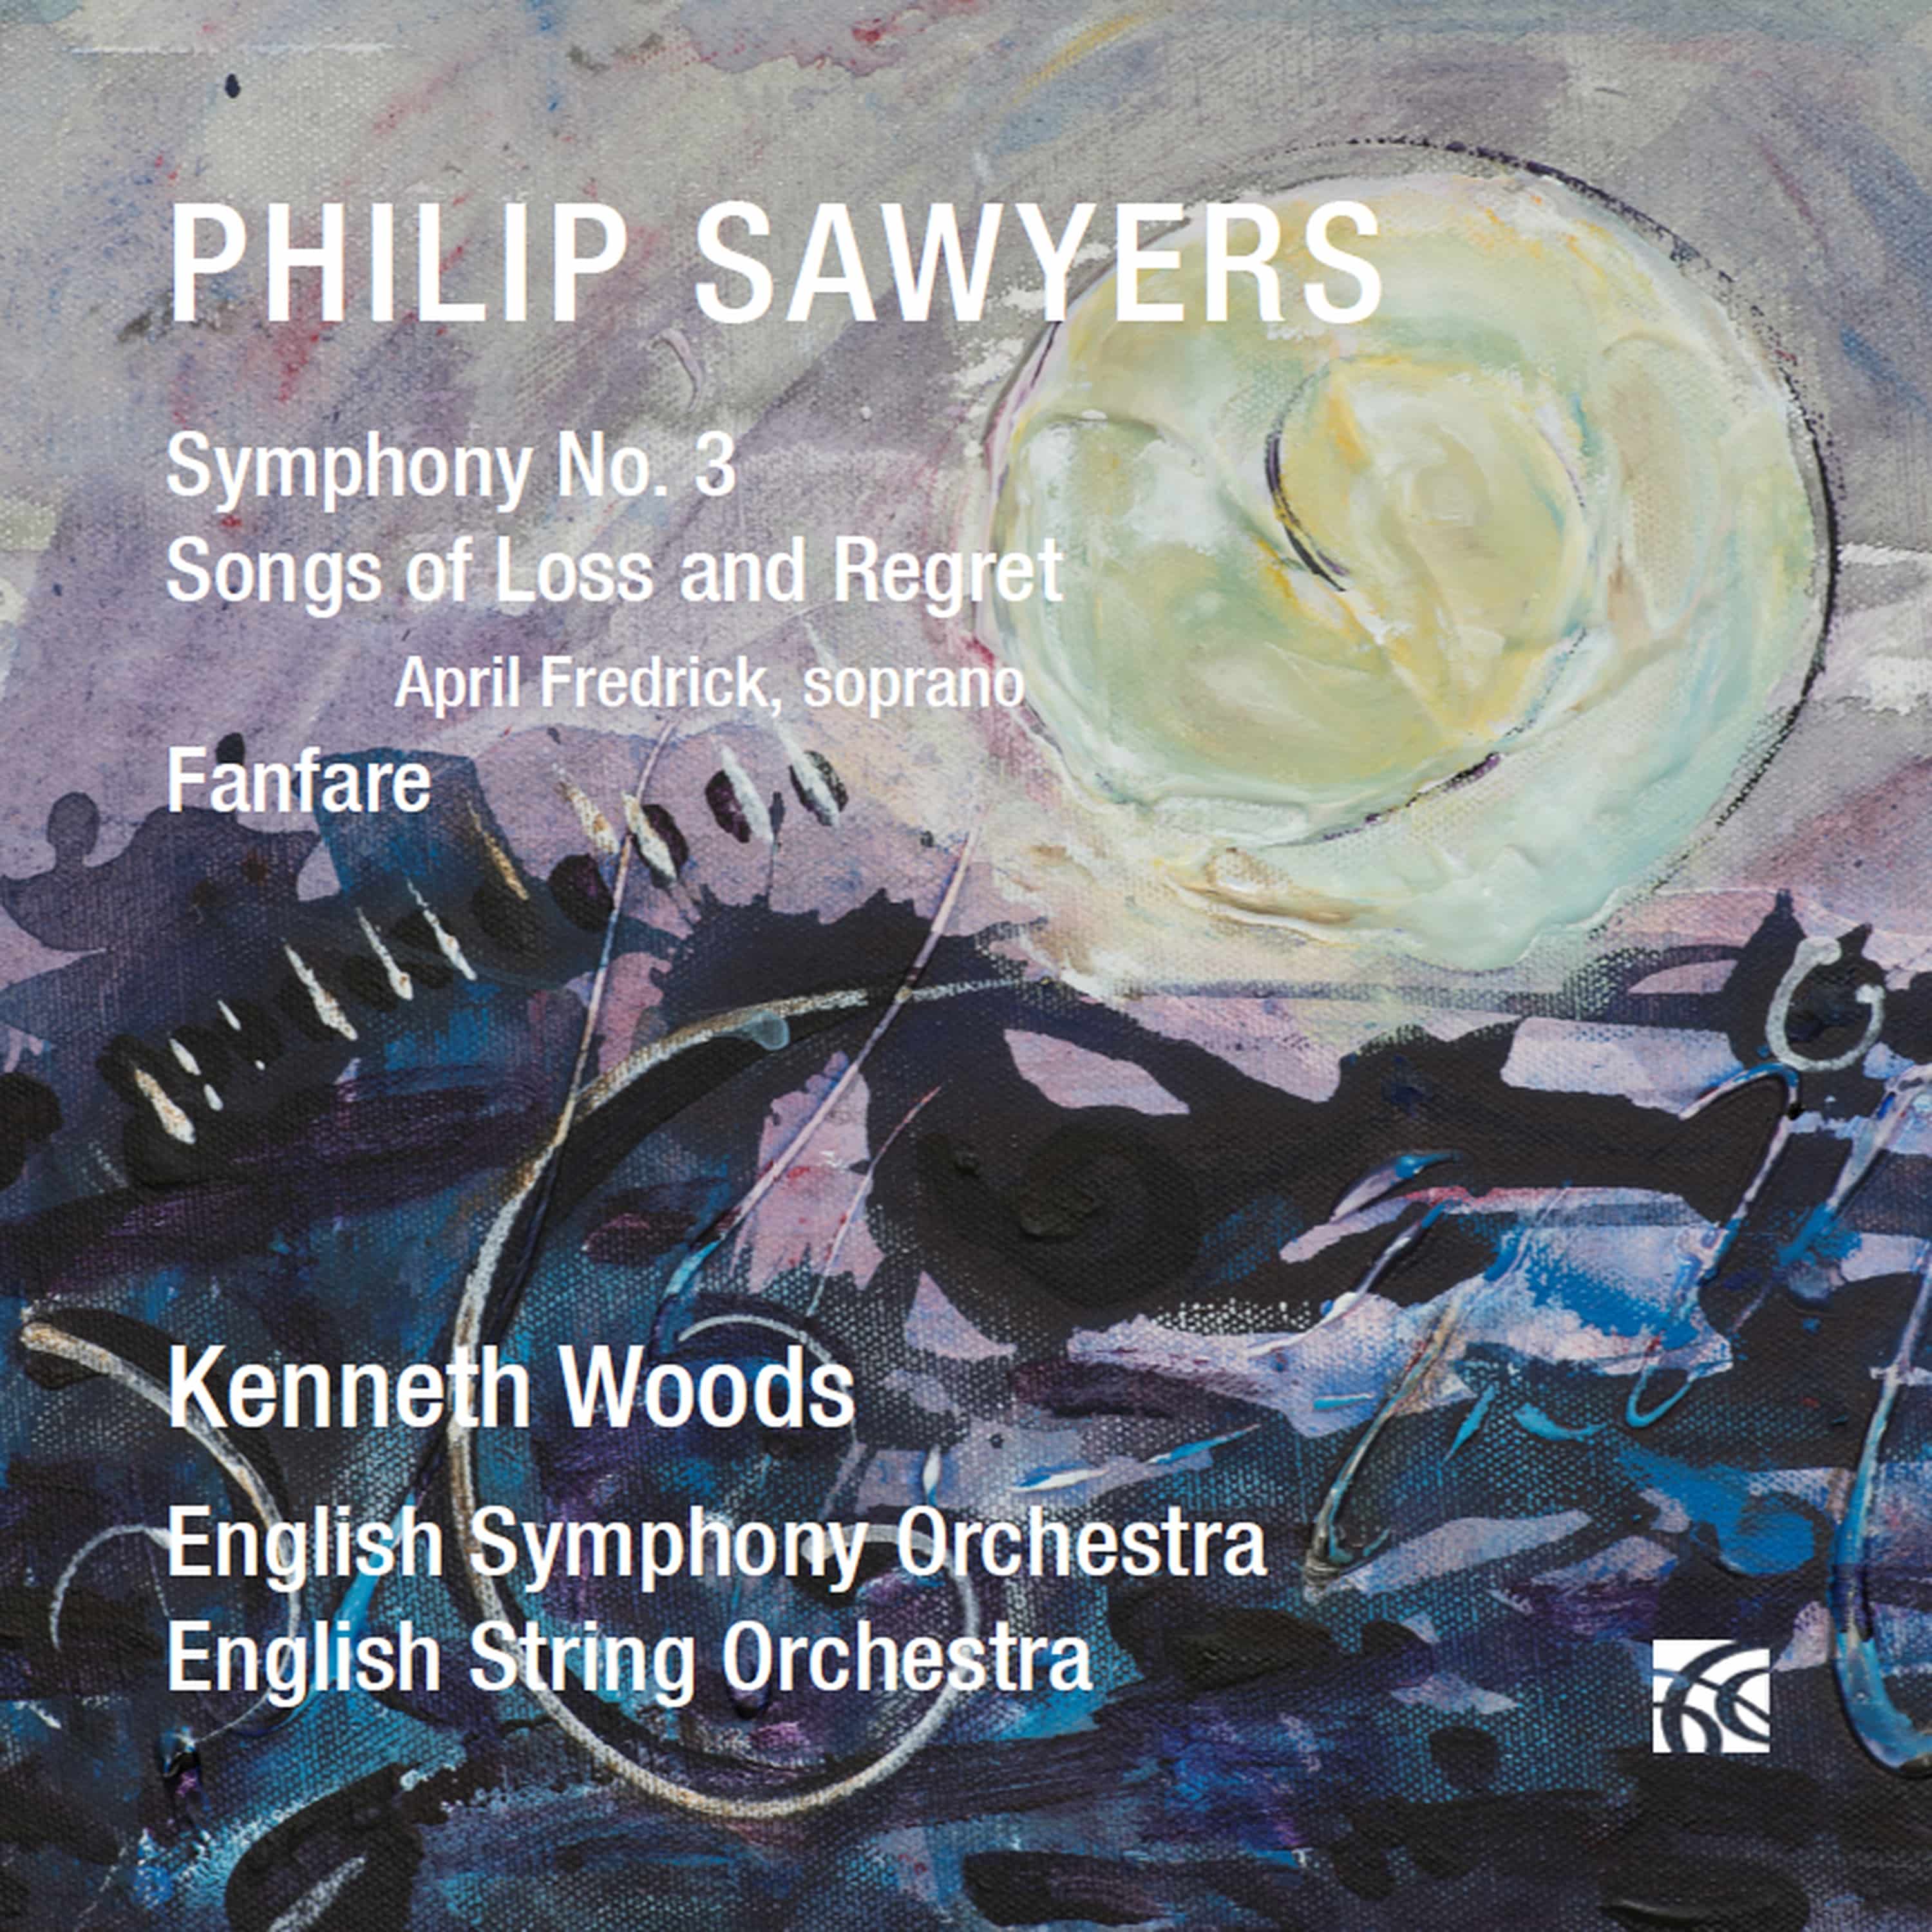 CD Review: Fanfare Magazine/Henry Fogel on Philip Sawyers Symphony no. 3